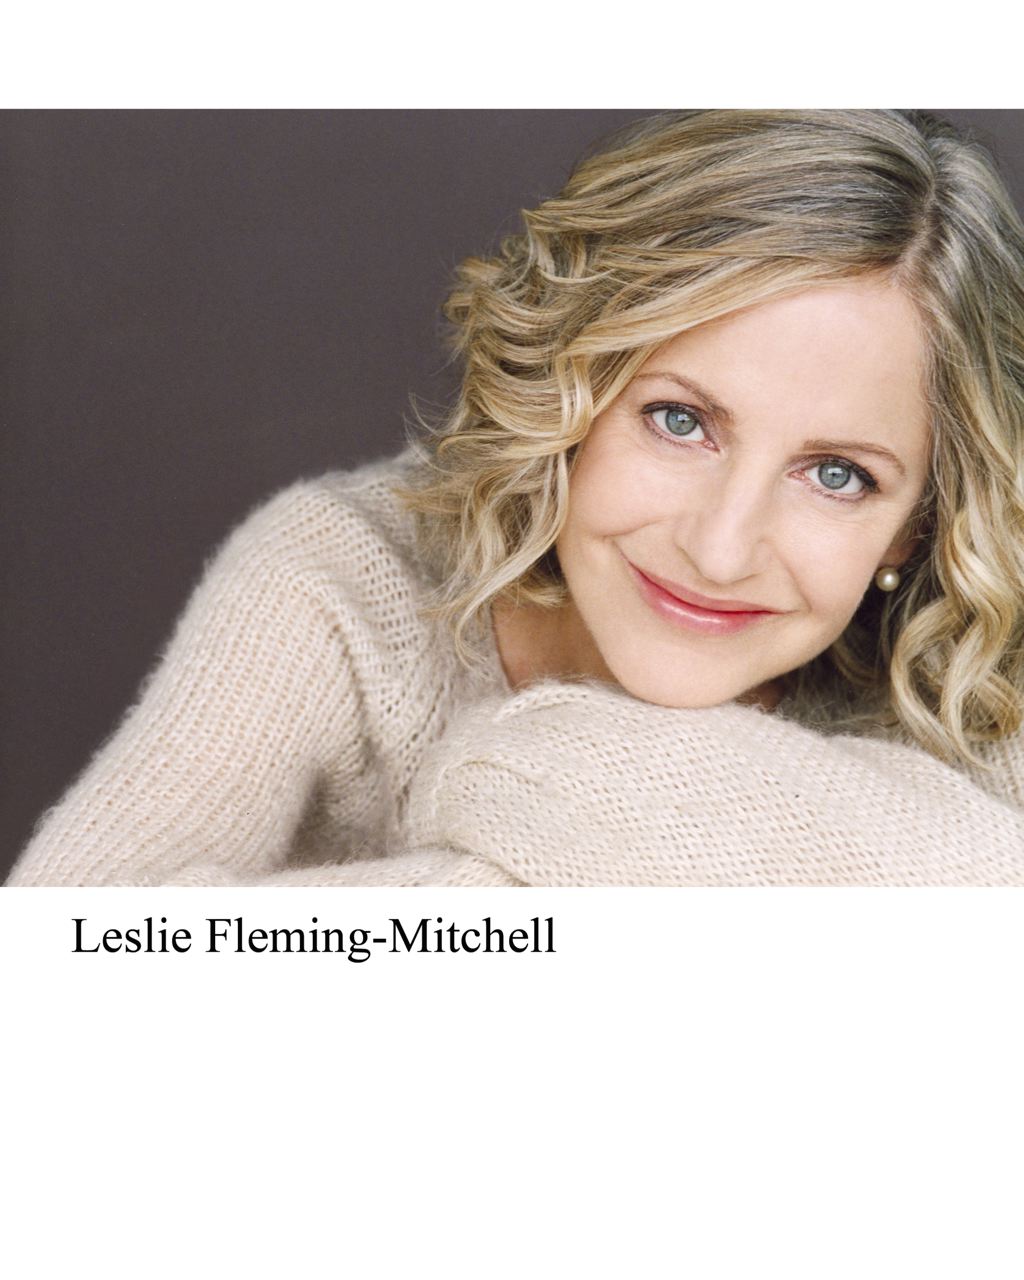 Leslie Fleming-Mitchell